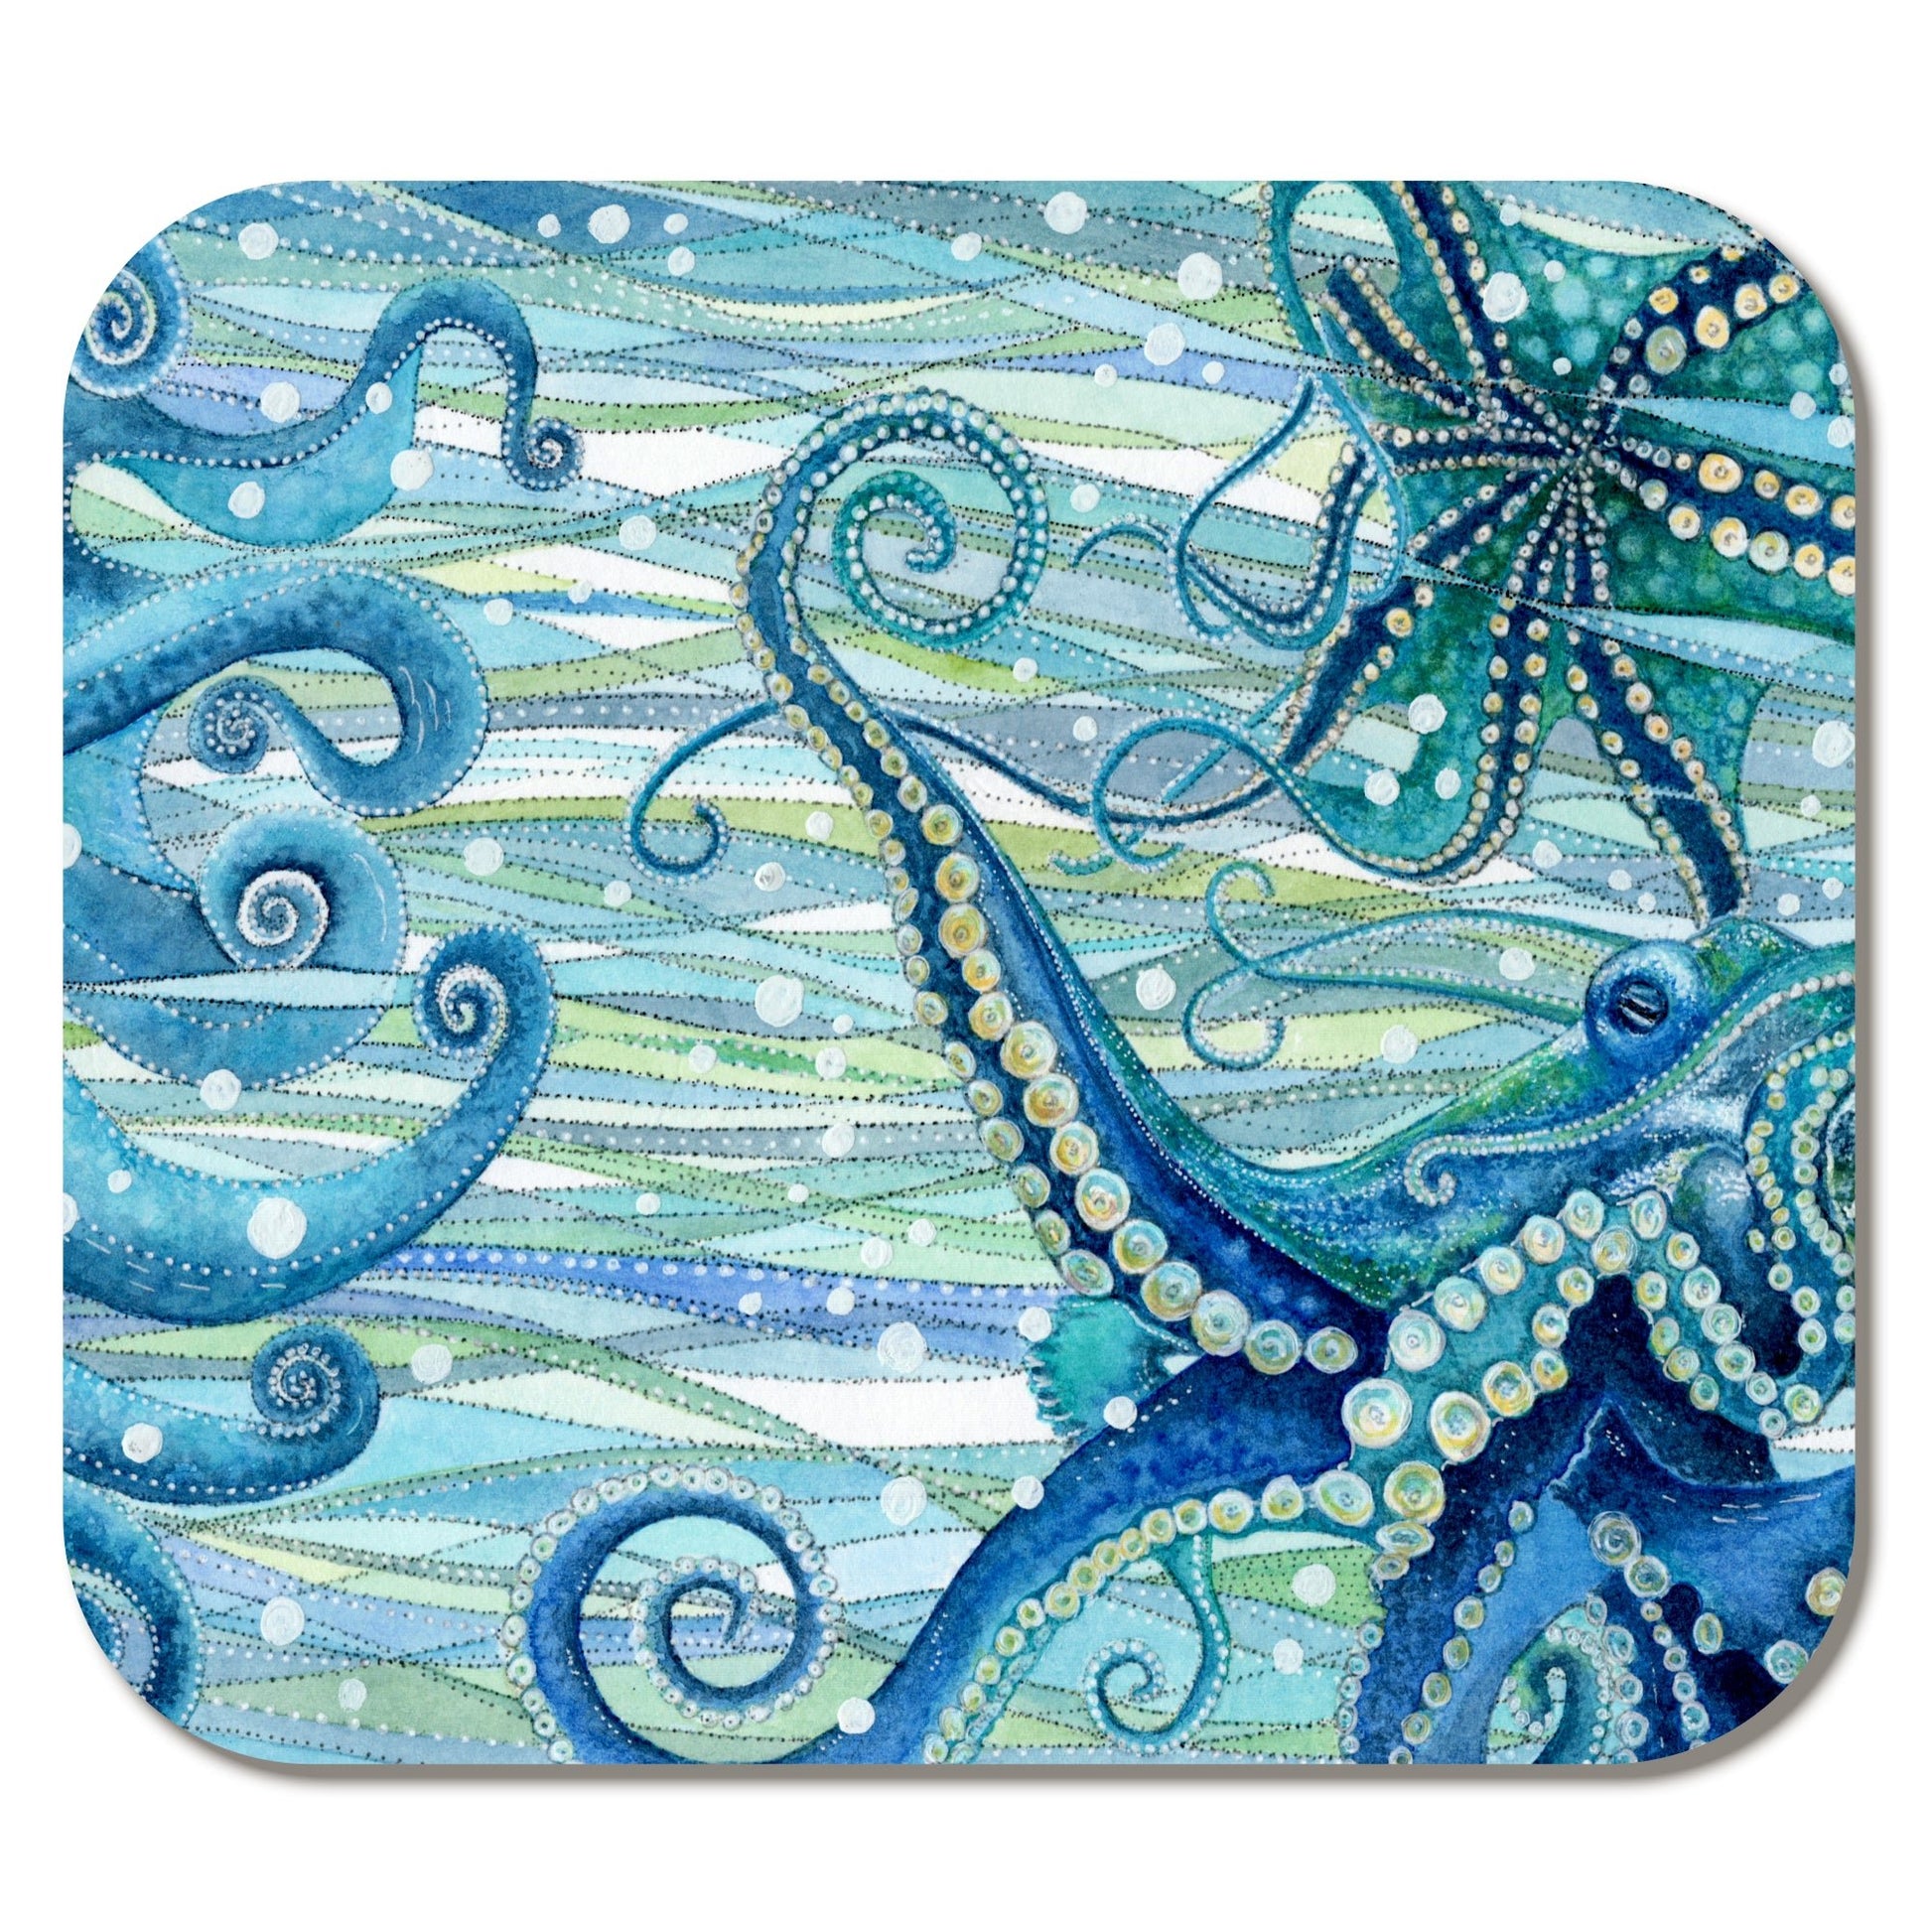 Coaster Set x 4 - Fish and Octopus - Coastal Watercolour Art - East Neuk Beach Crafts